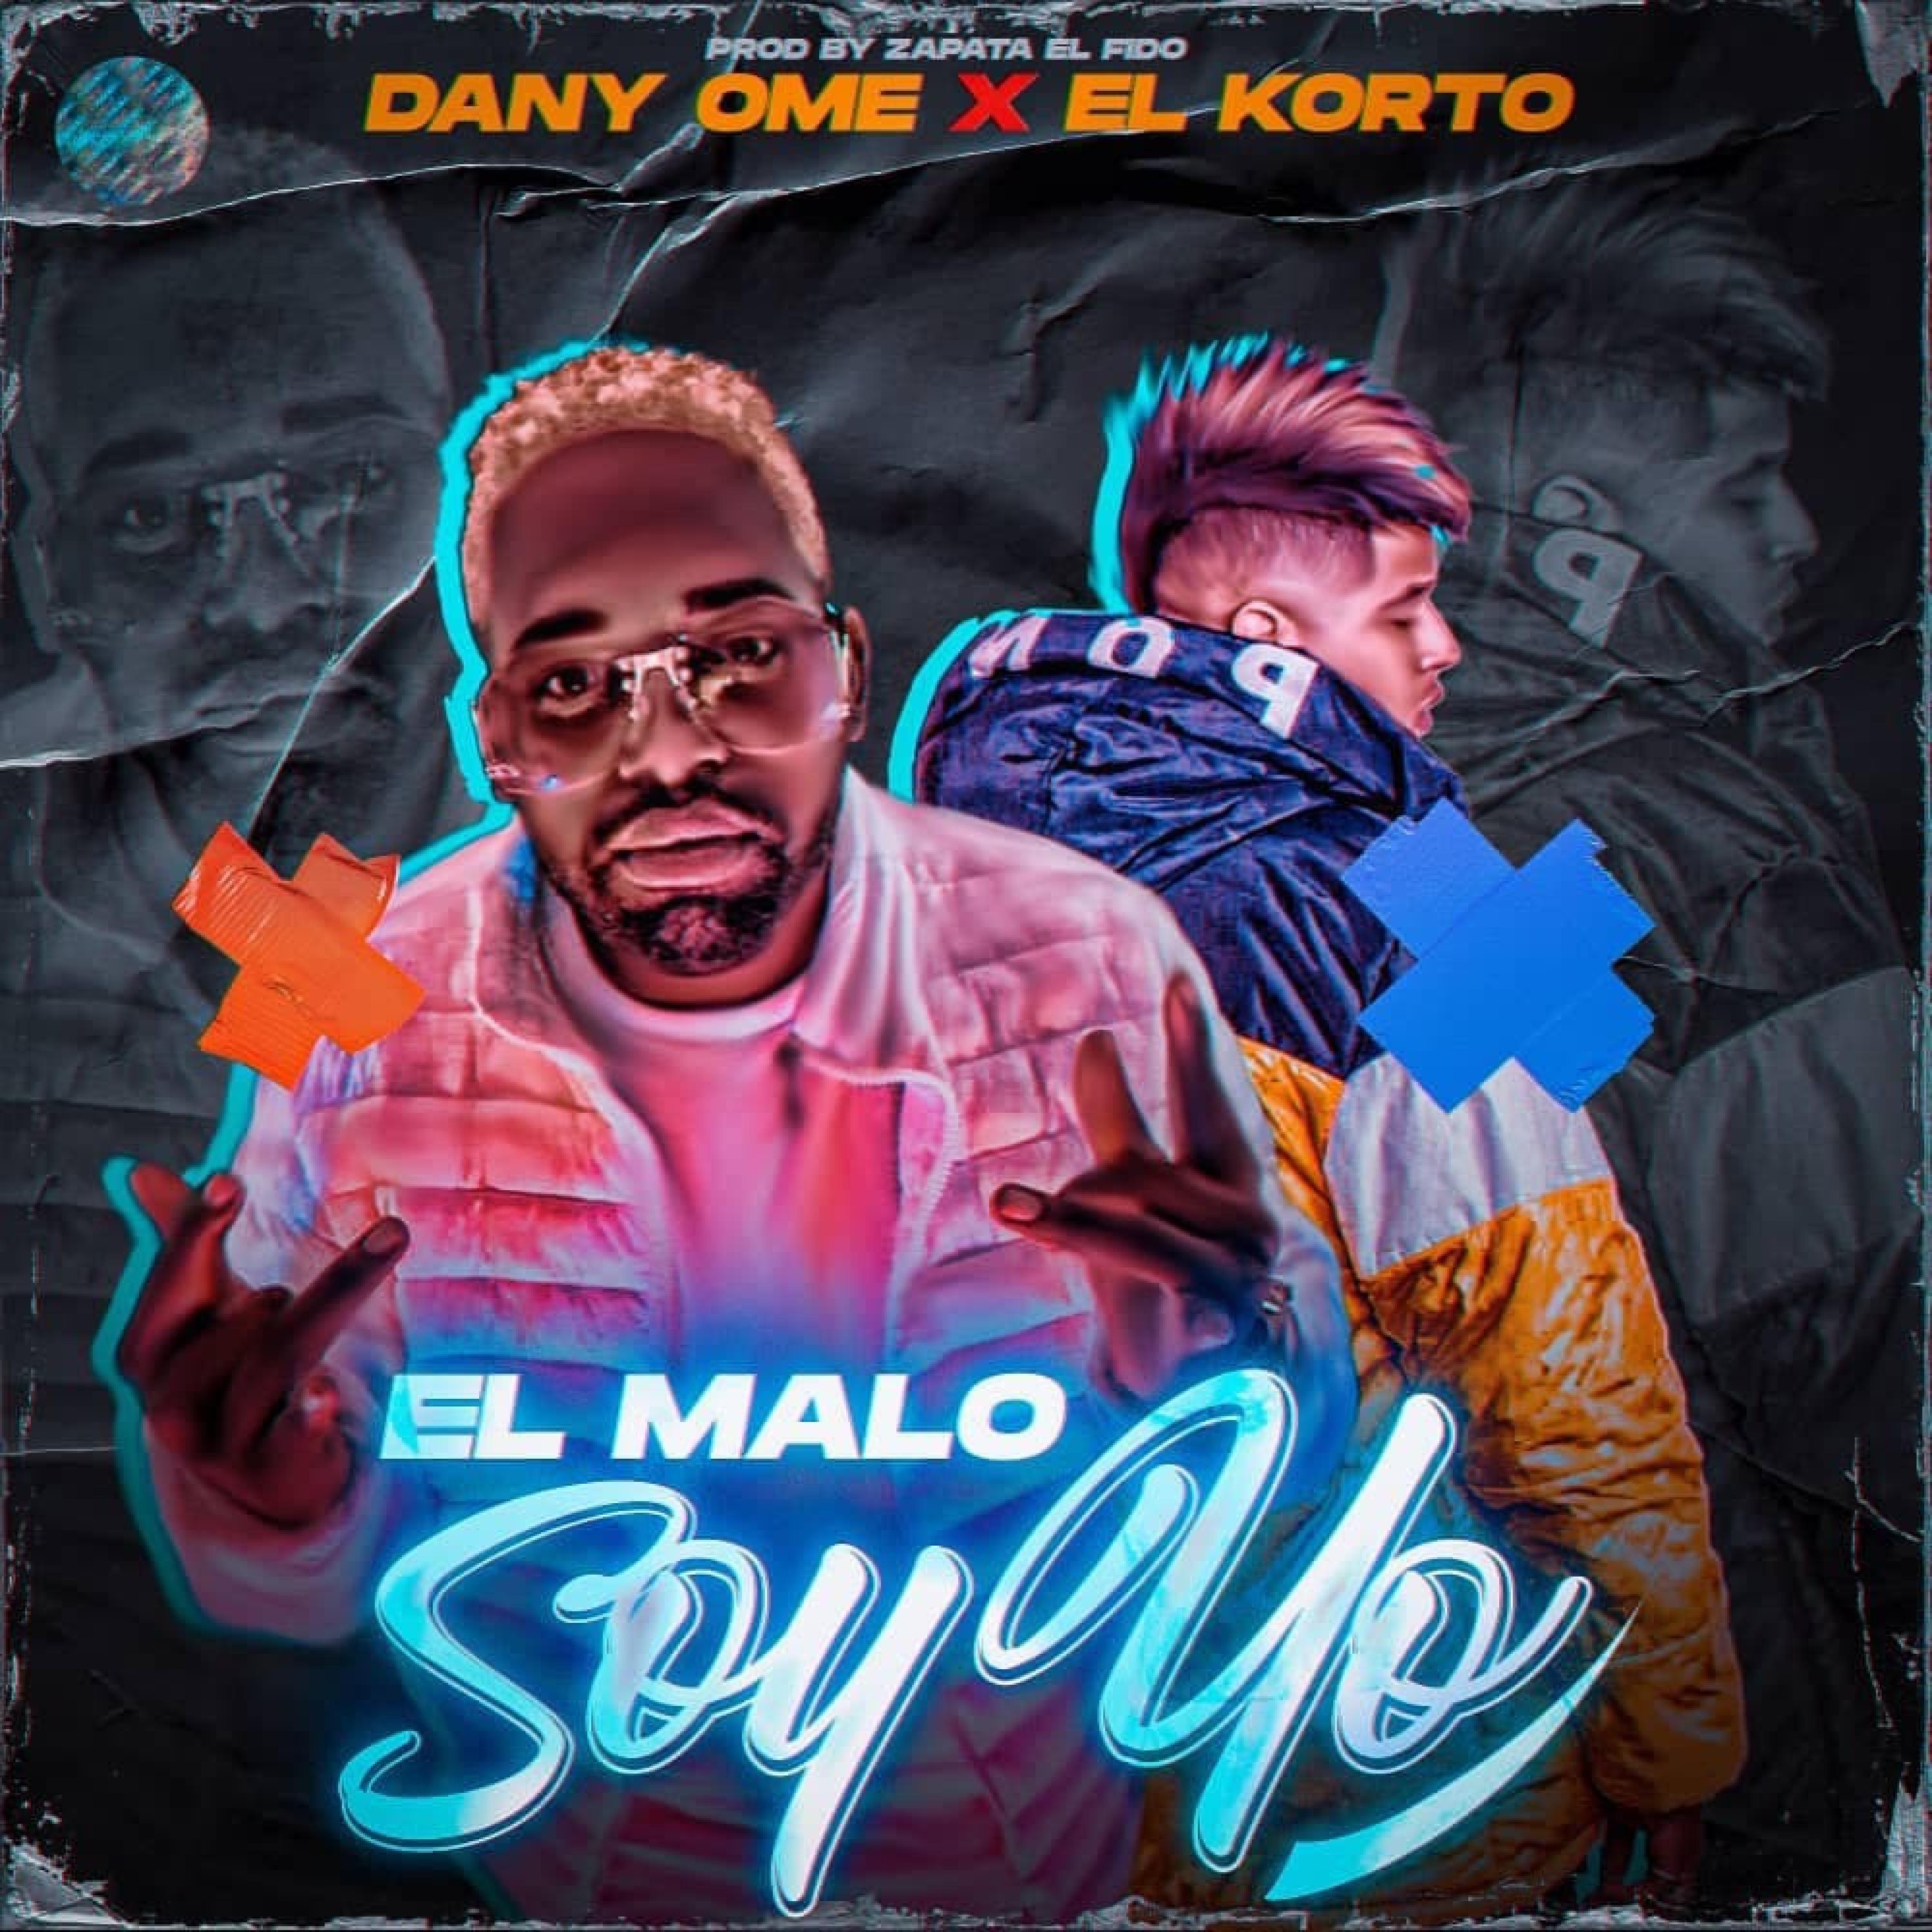 El Korto - El malo soy yo (feat. Dany ome)